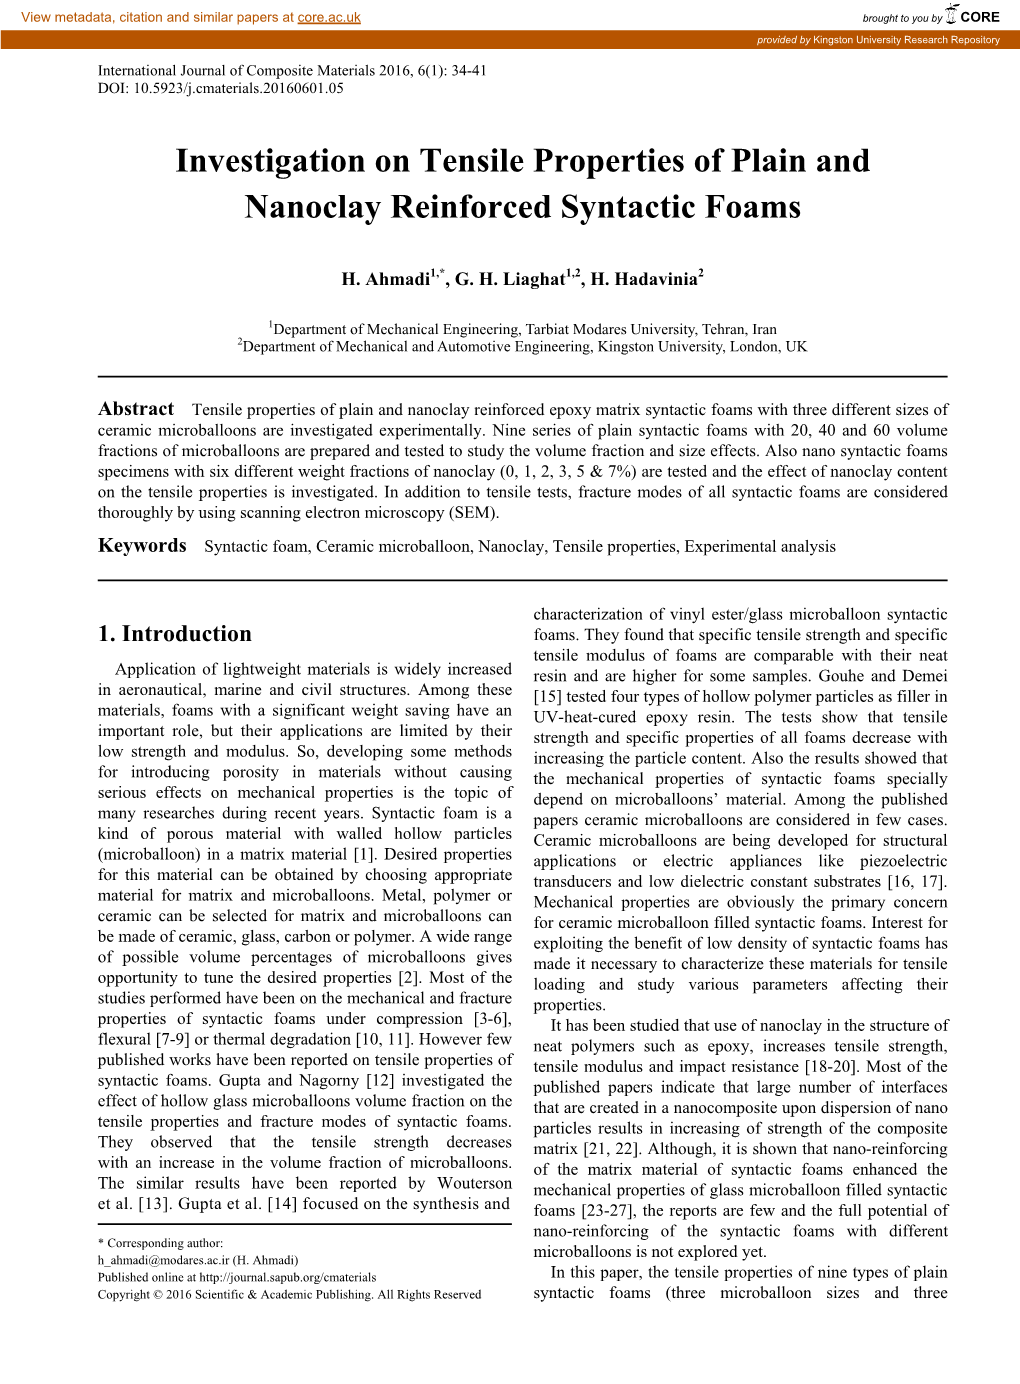 Syntactic Foam, Ceramic Microballoon, Nanoclay, Tensile Properties, Experimental Analysis